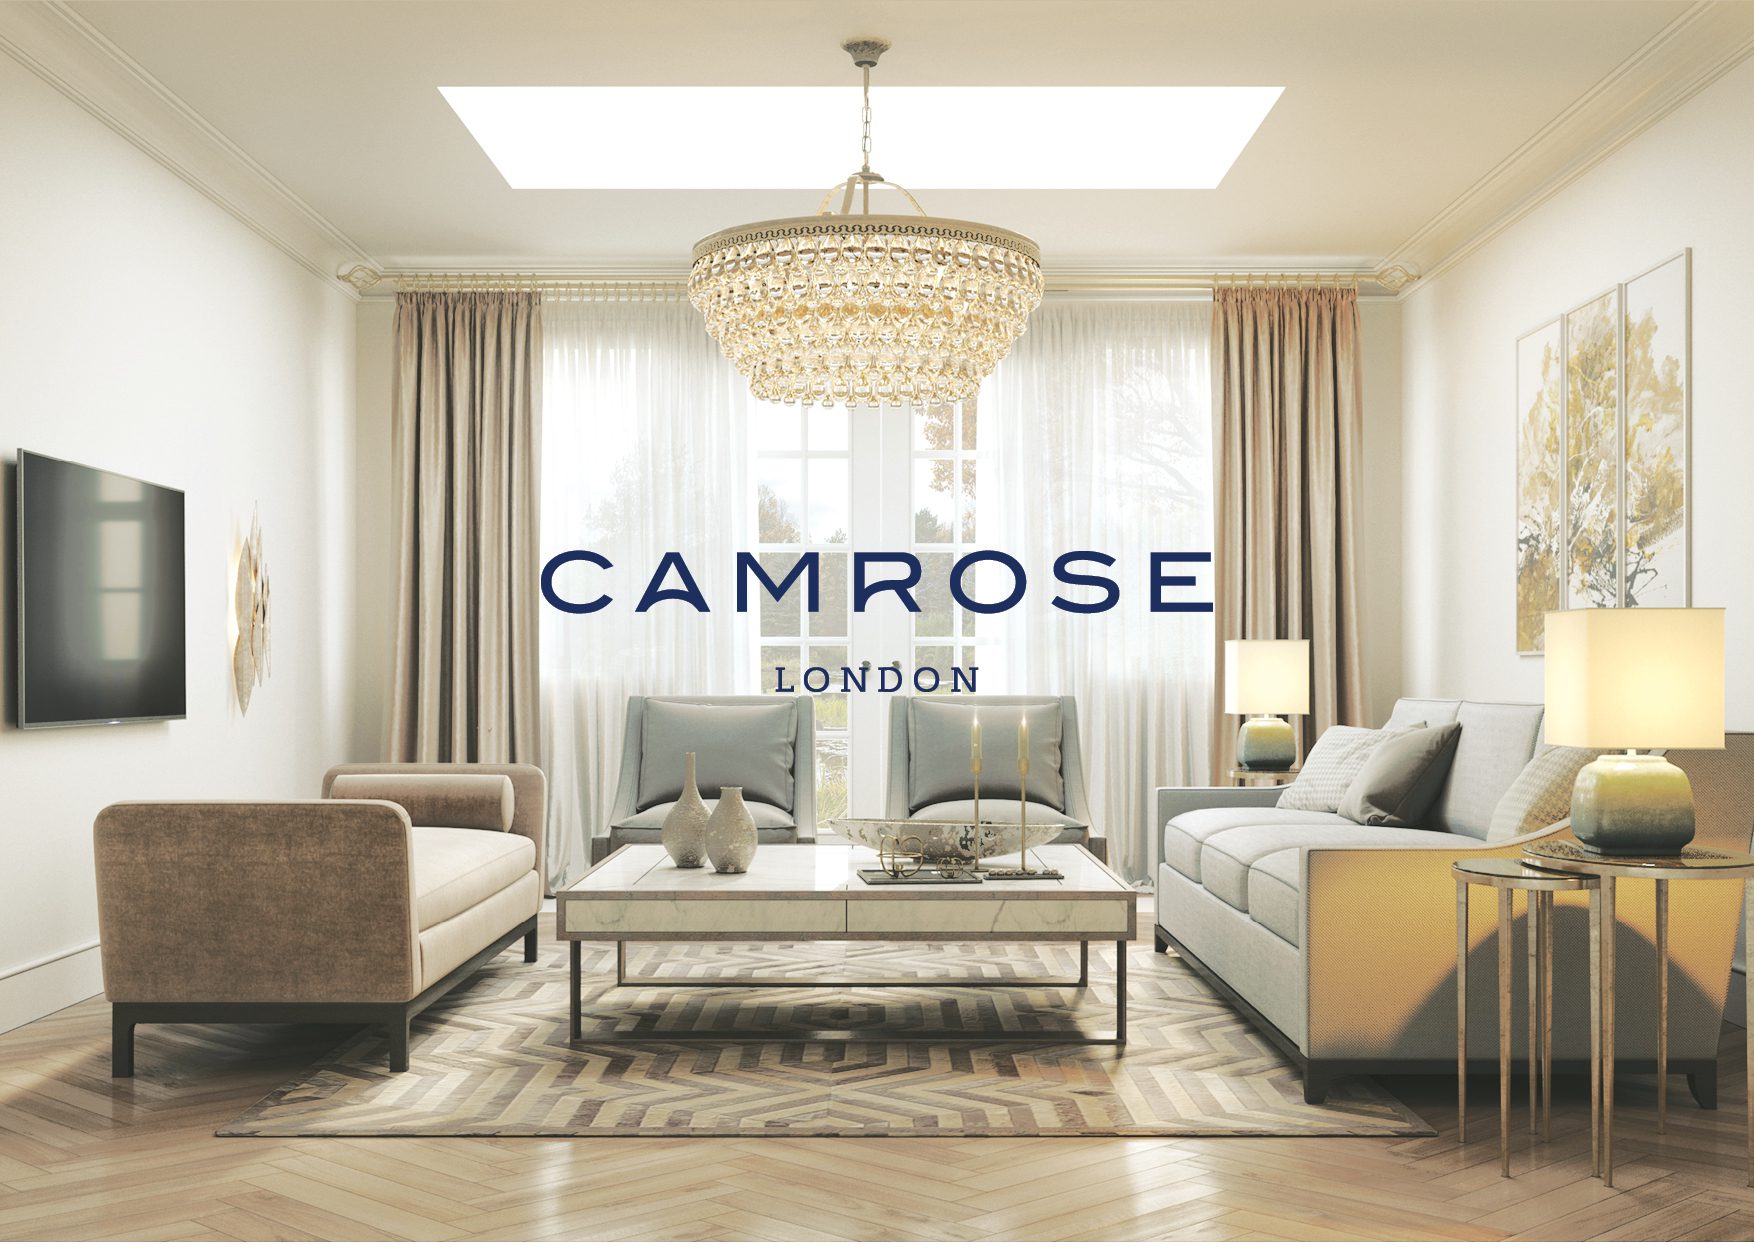 WEARECAPRI portfolio Camrose: Camrose london